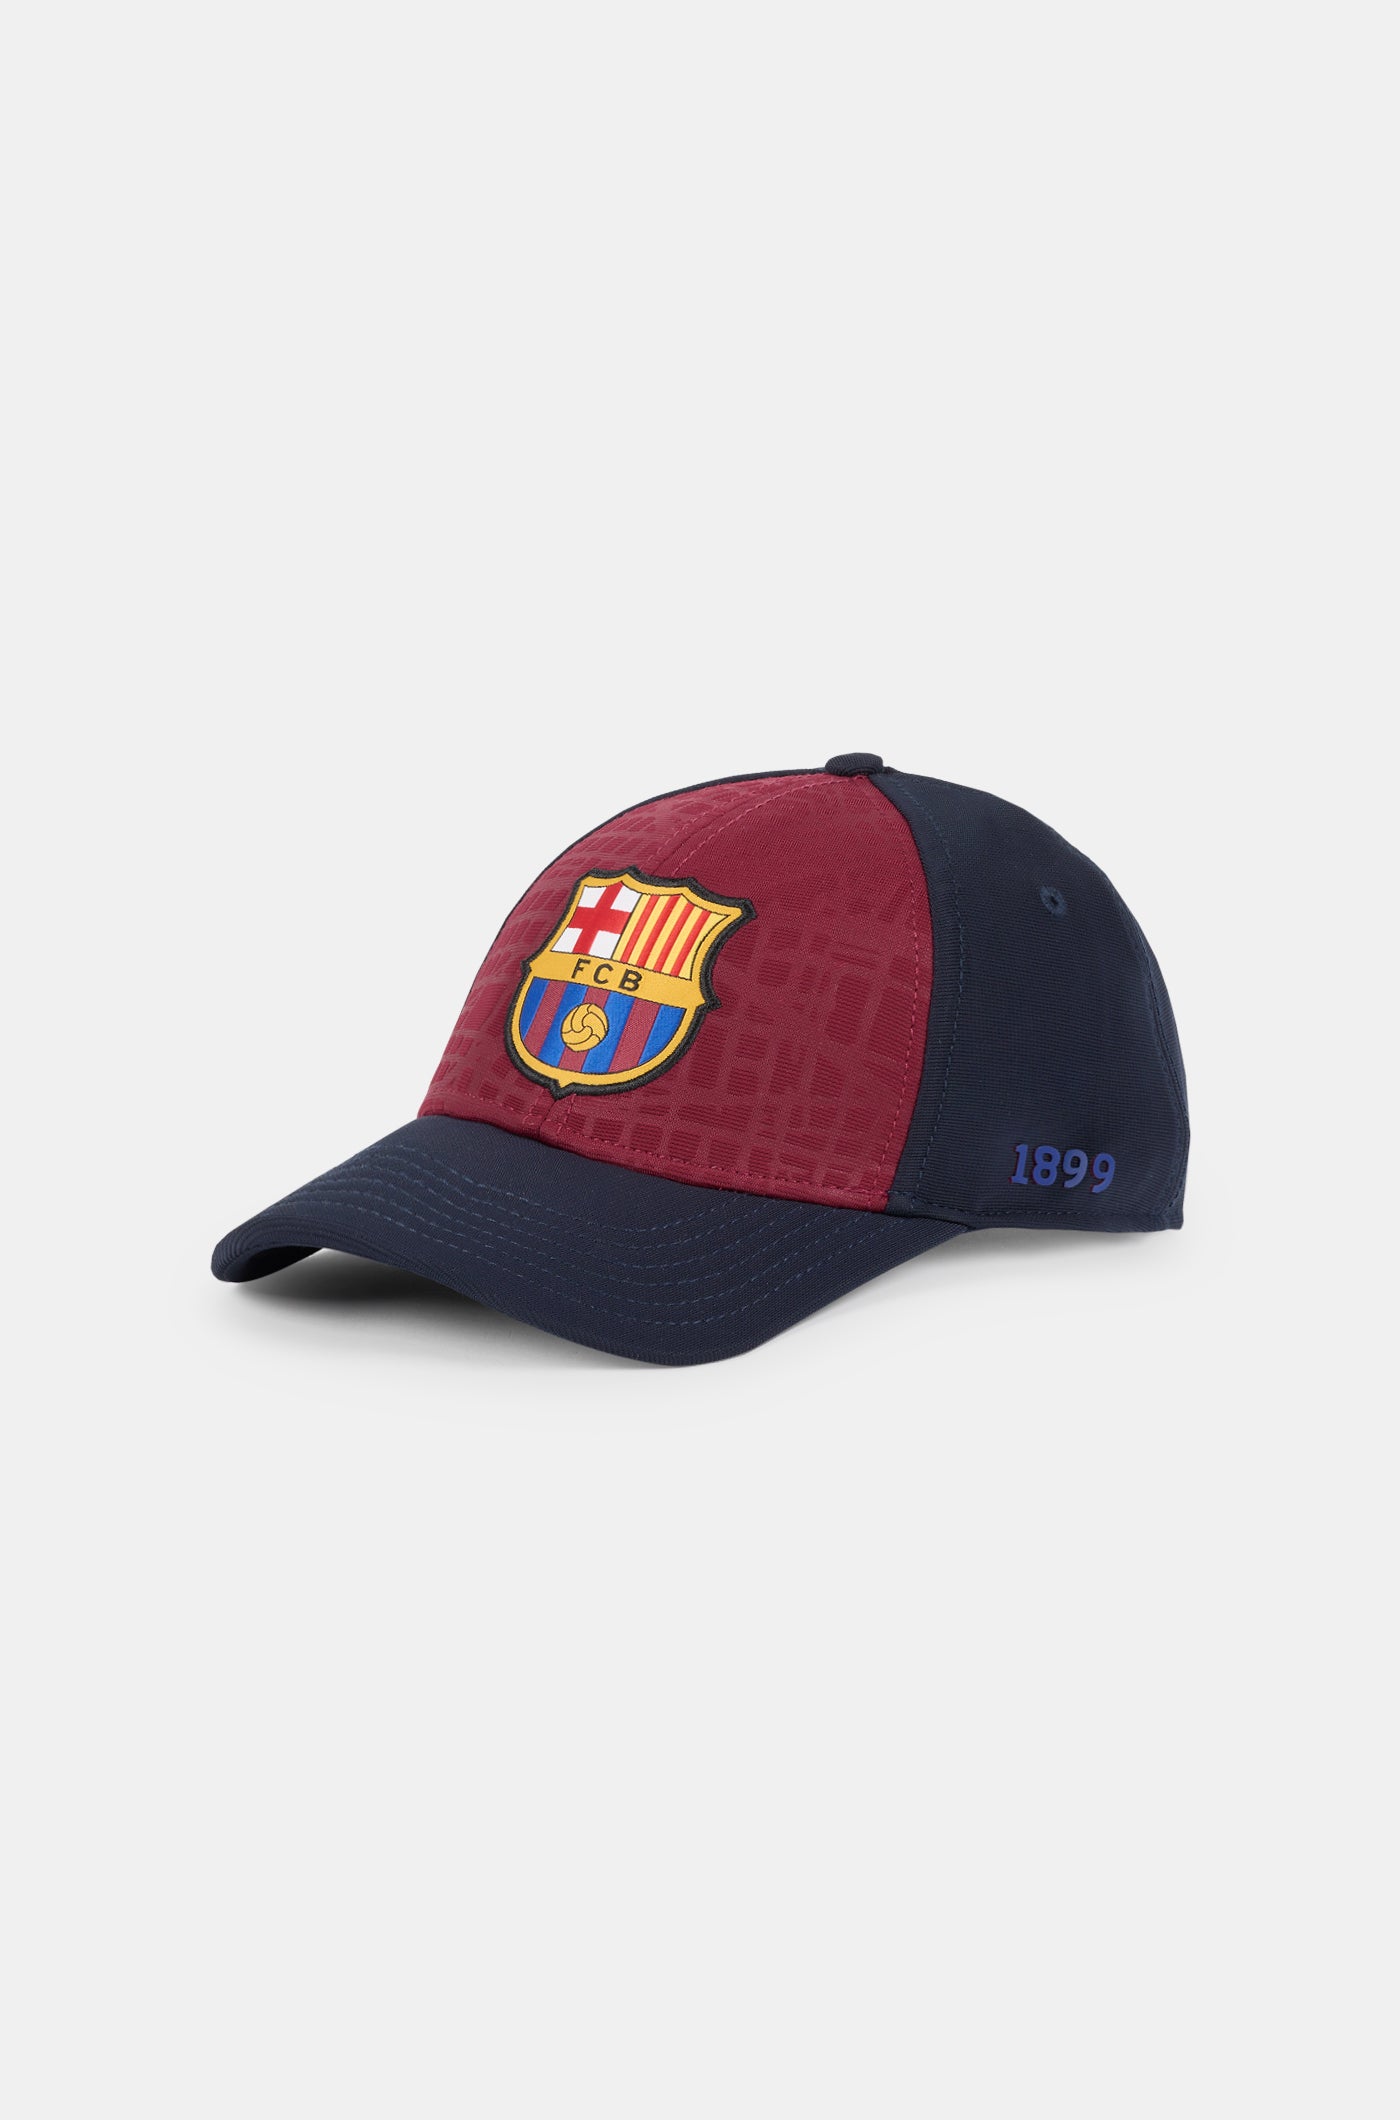 FC Barcelona-Kappe mit Wappen 1899 